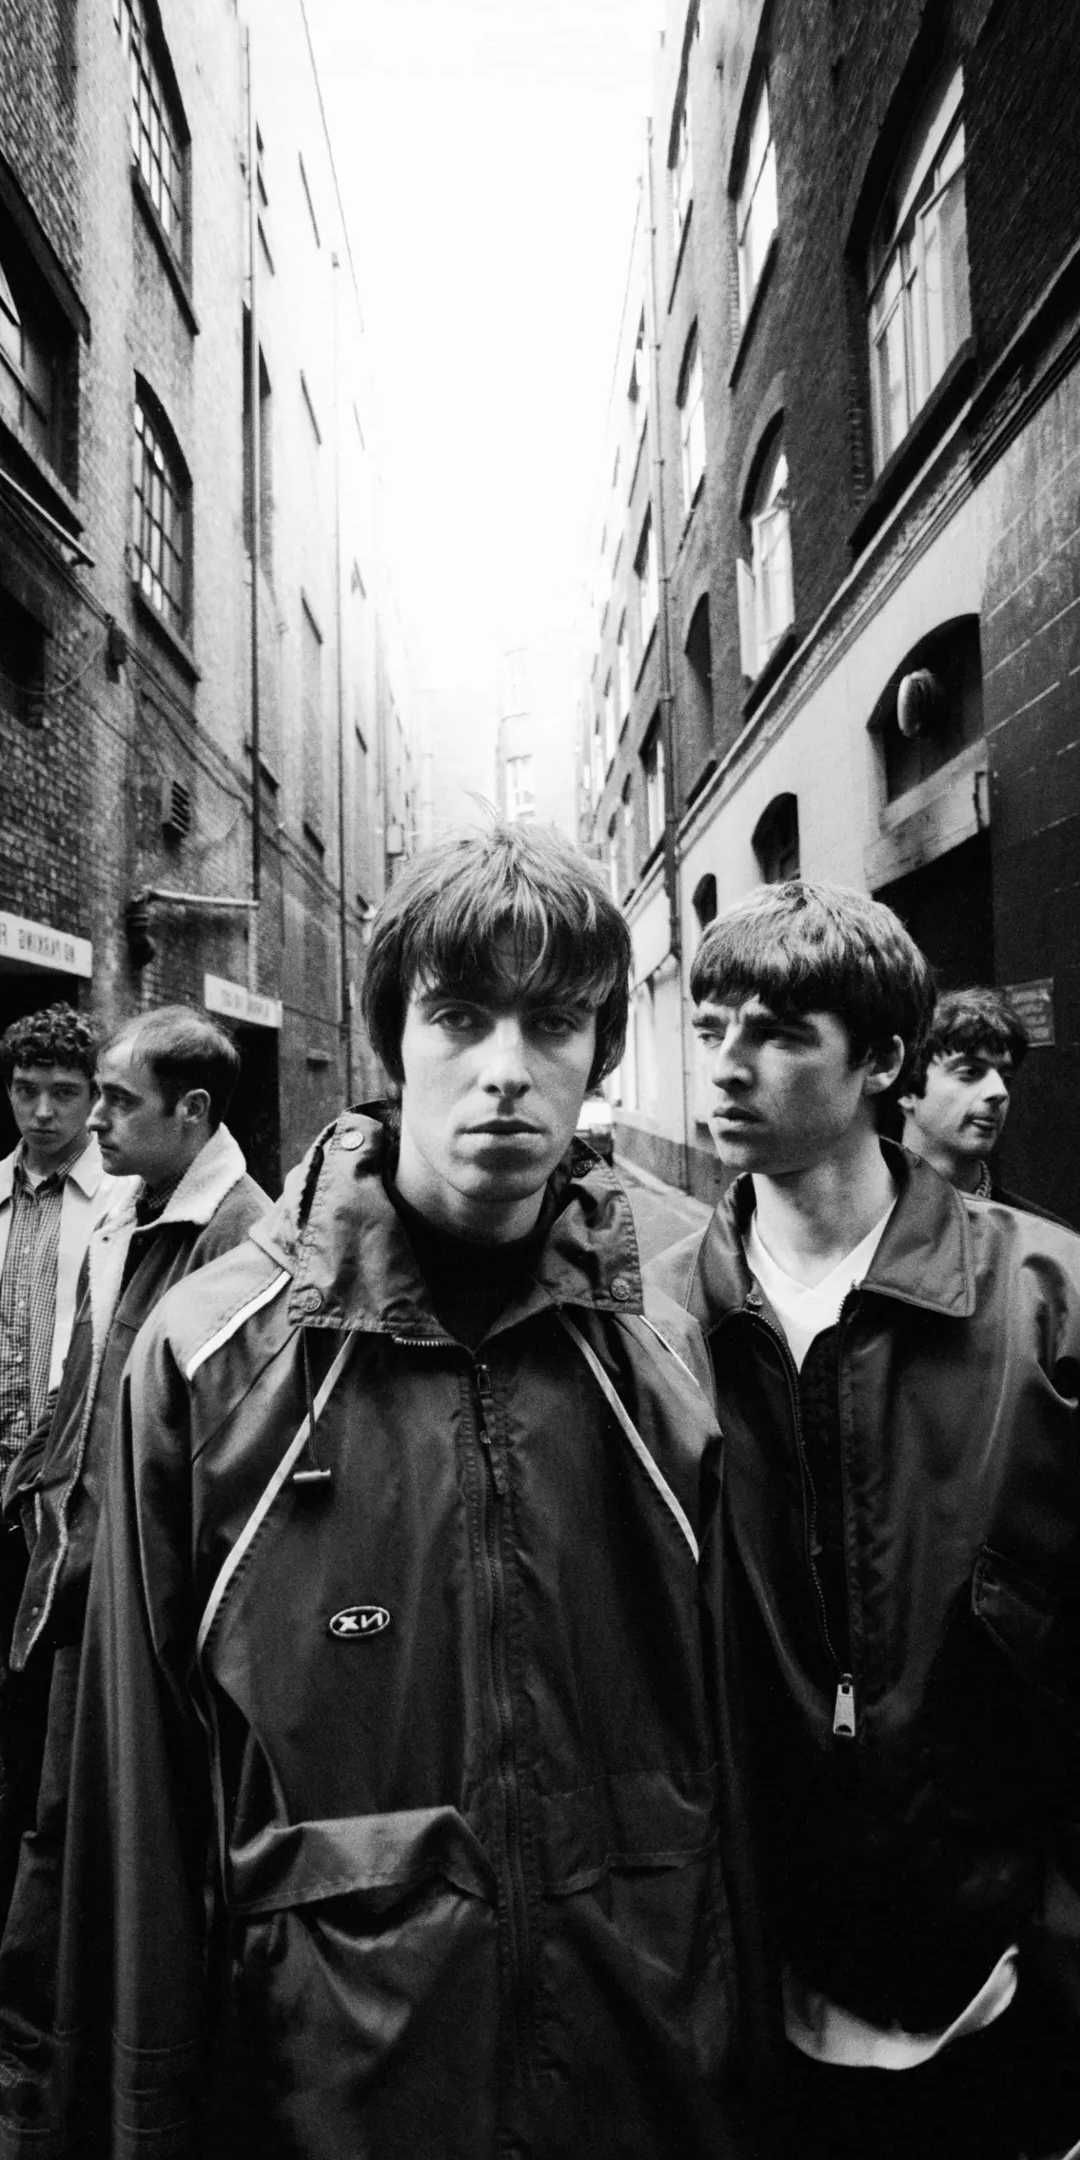 Monochrome Oasis Band Group Of Men Rock Bands Music England Manchester Building Noel Gallagher UK Li 1080x2160